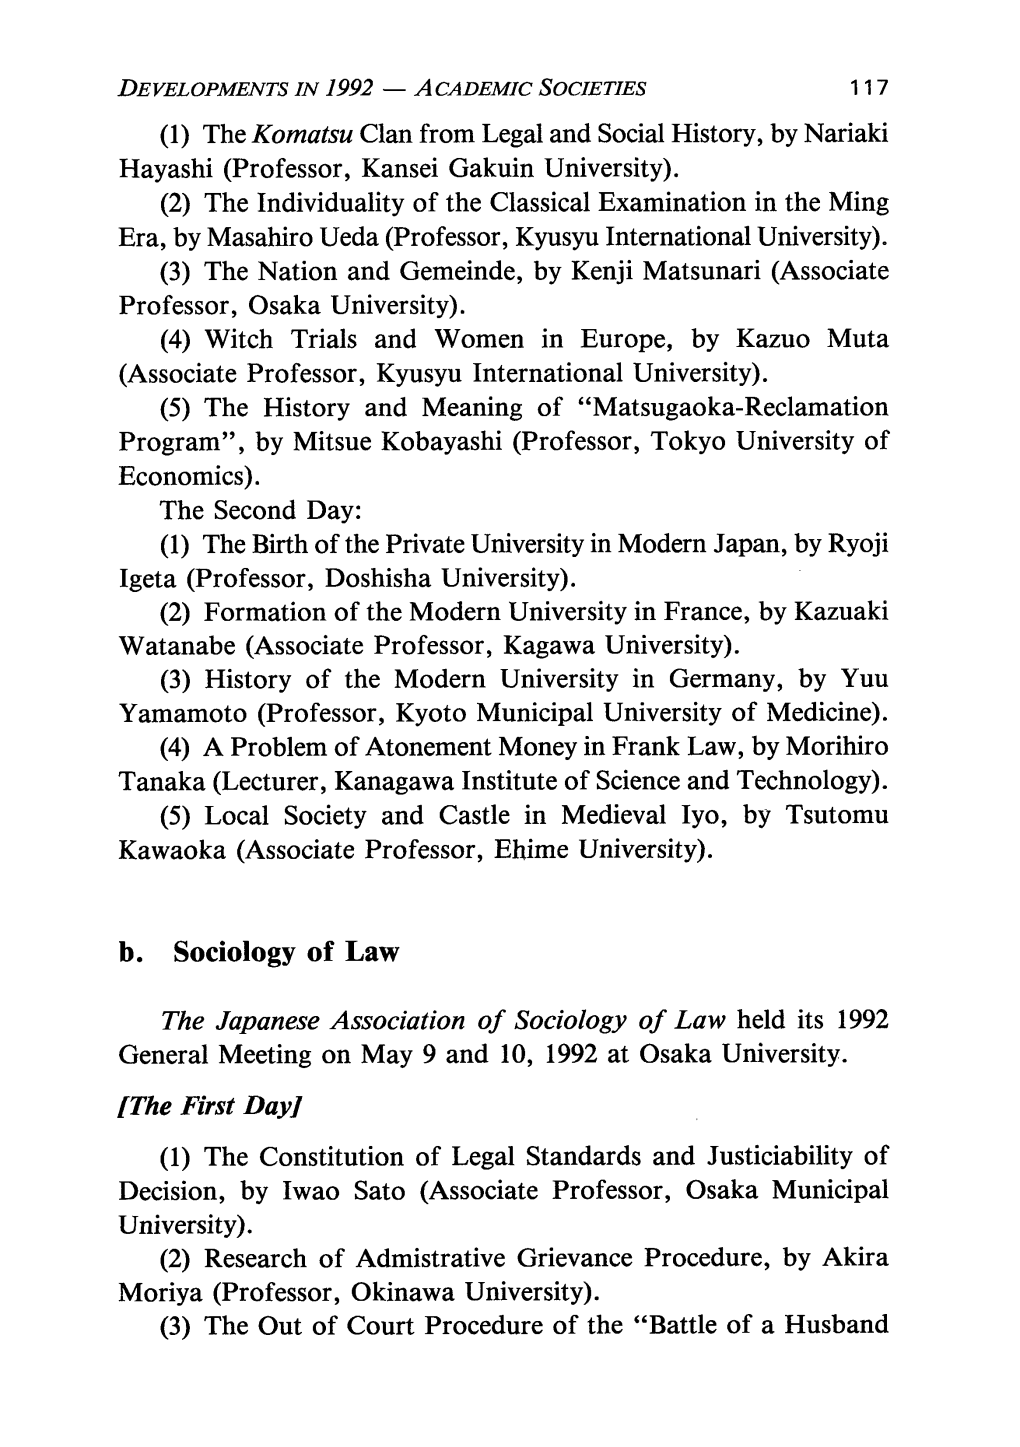 B. Sociology of Law